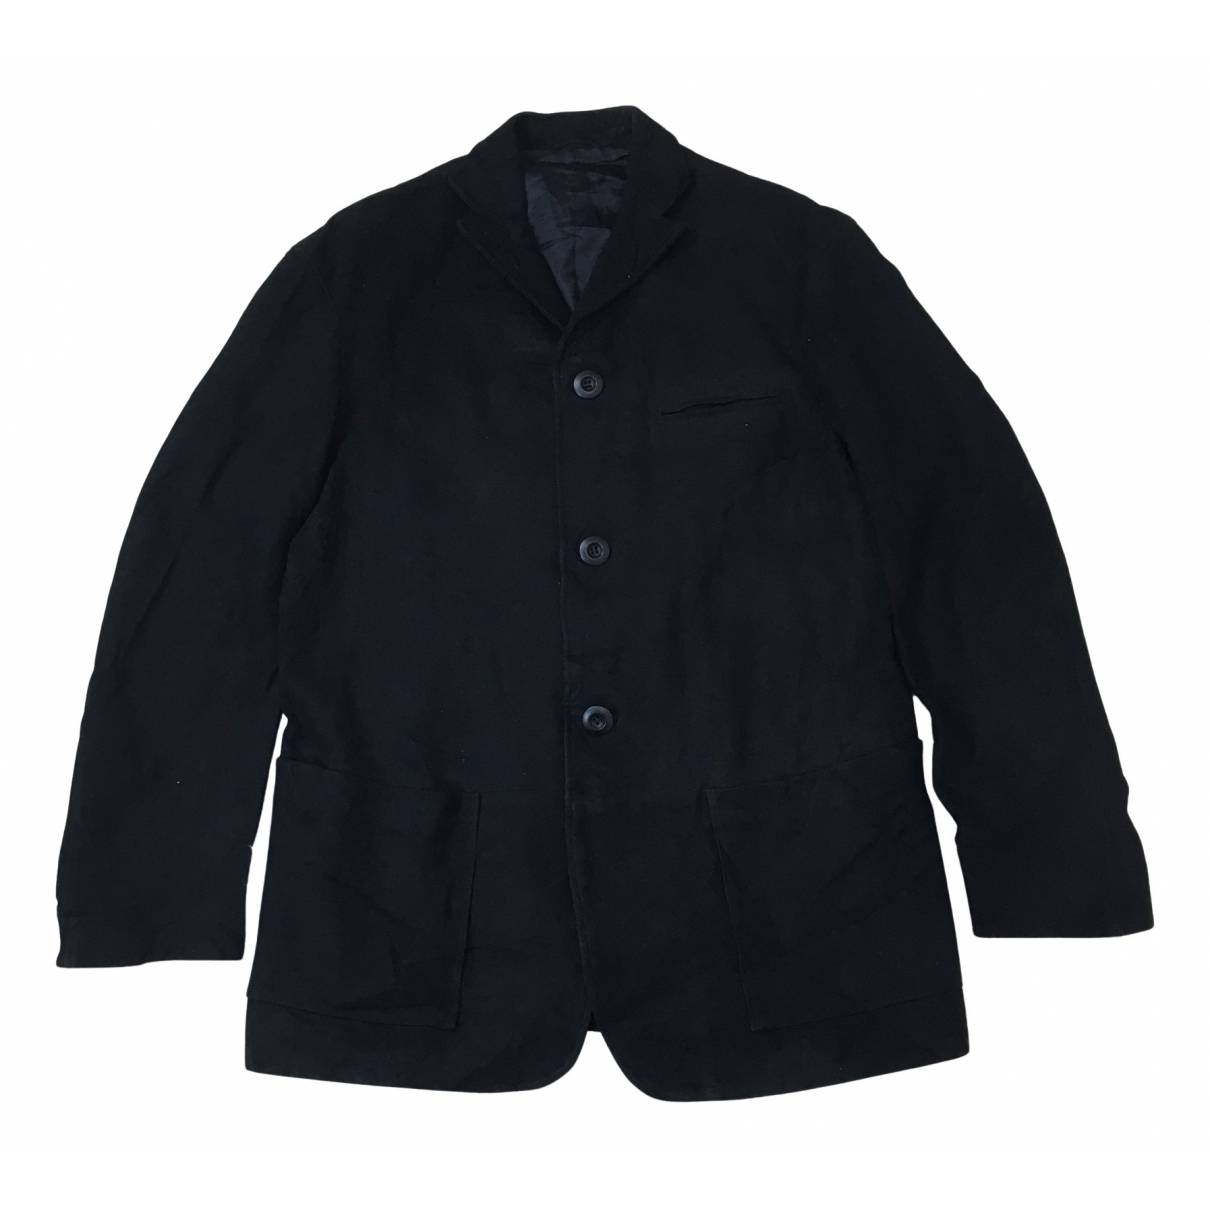 Jacket Neighborhood Black size M International in Suede - 24919907